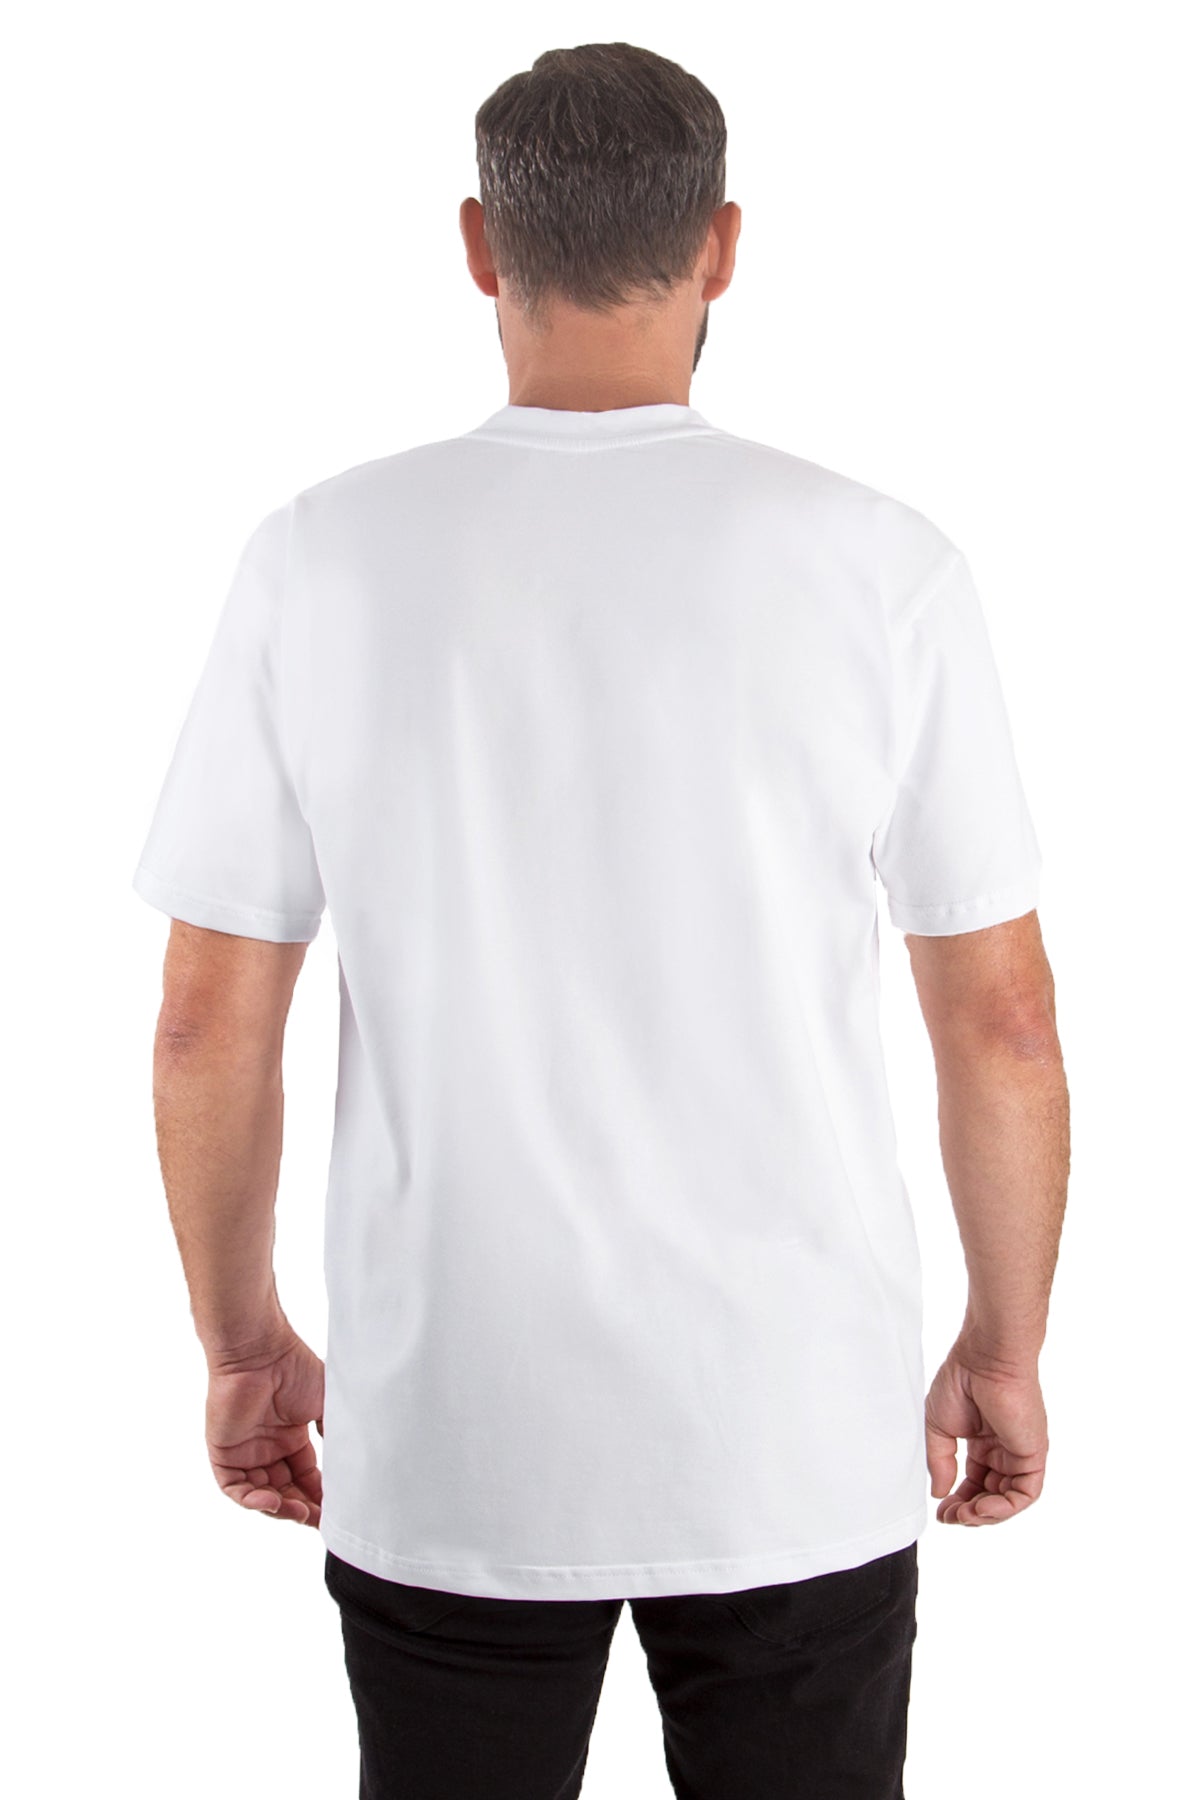 T-Shirt V-Neck (10er-Pack) - mint